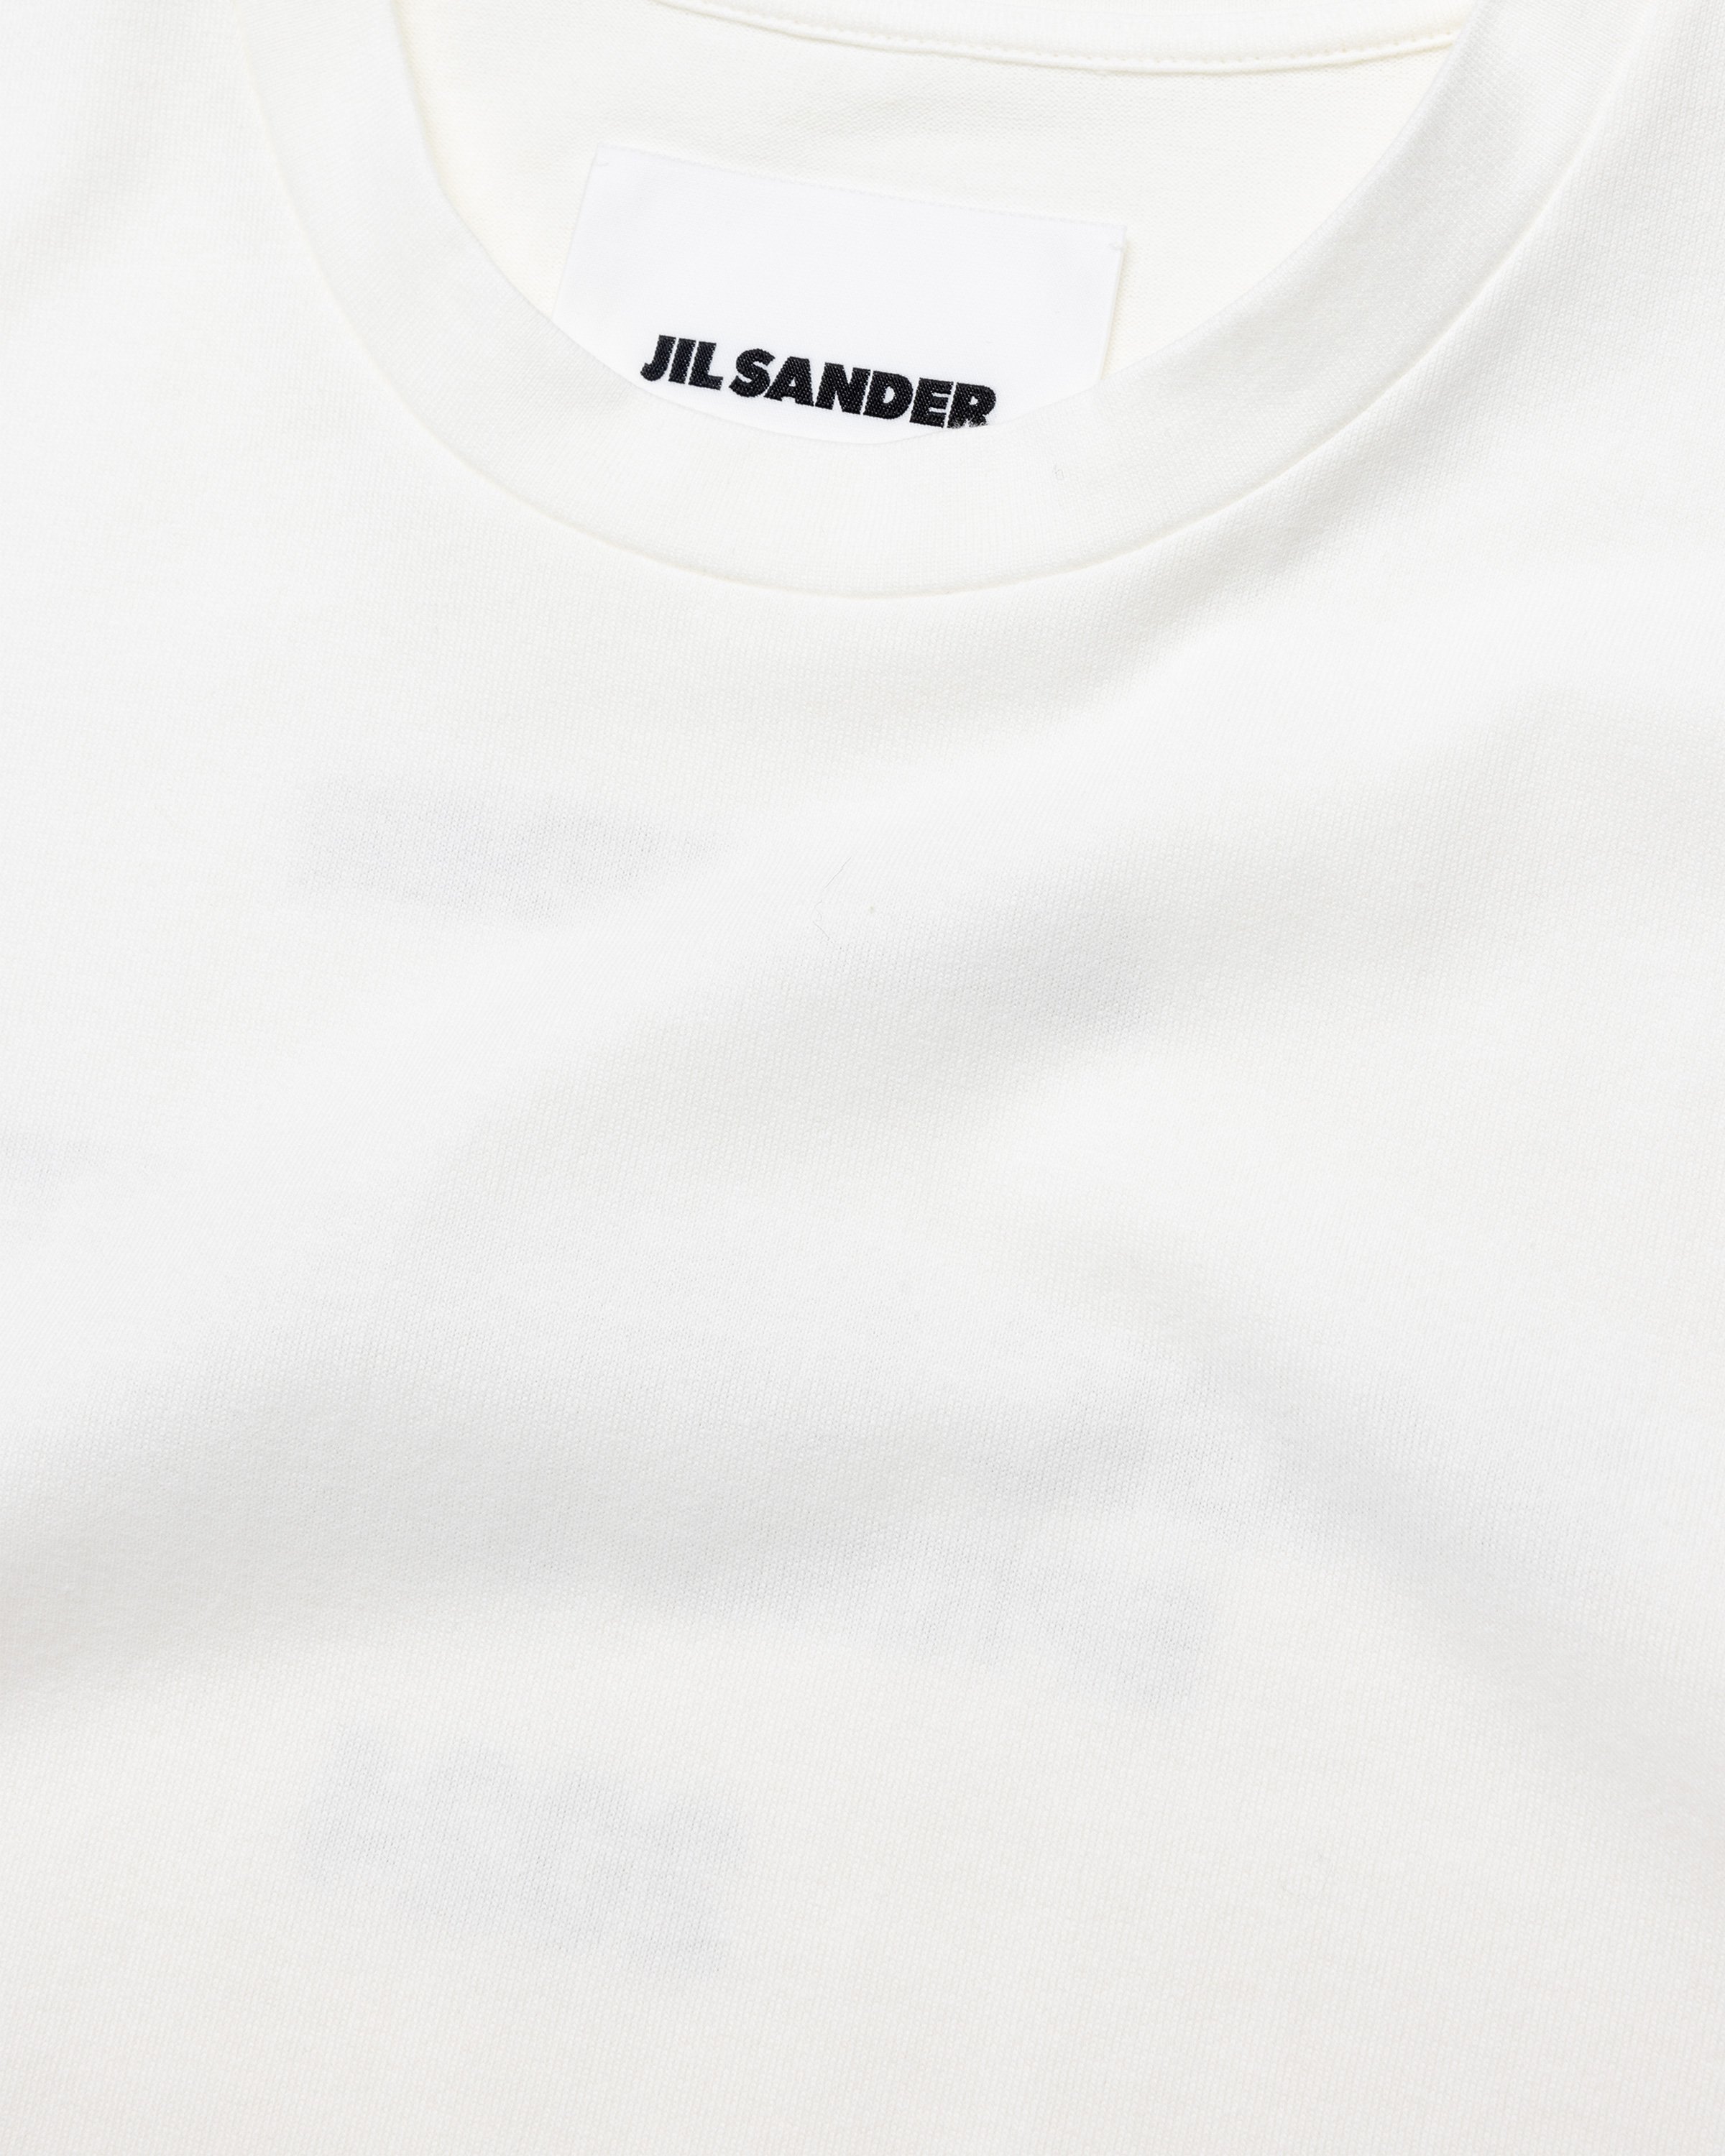 Jil Sander - Short-Sleeve T-Shirt Coconut - Clothing - White - Image 6